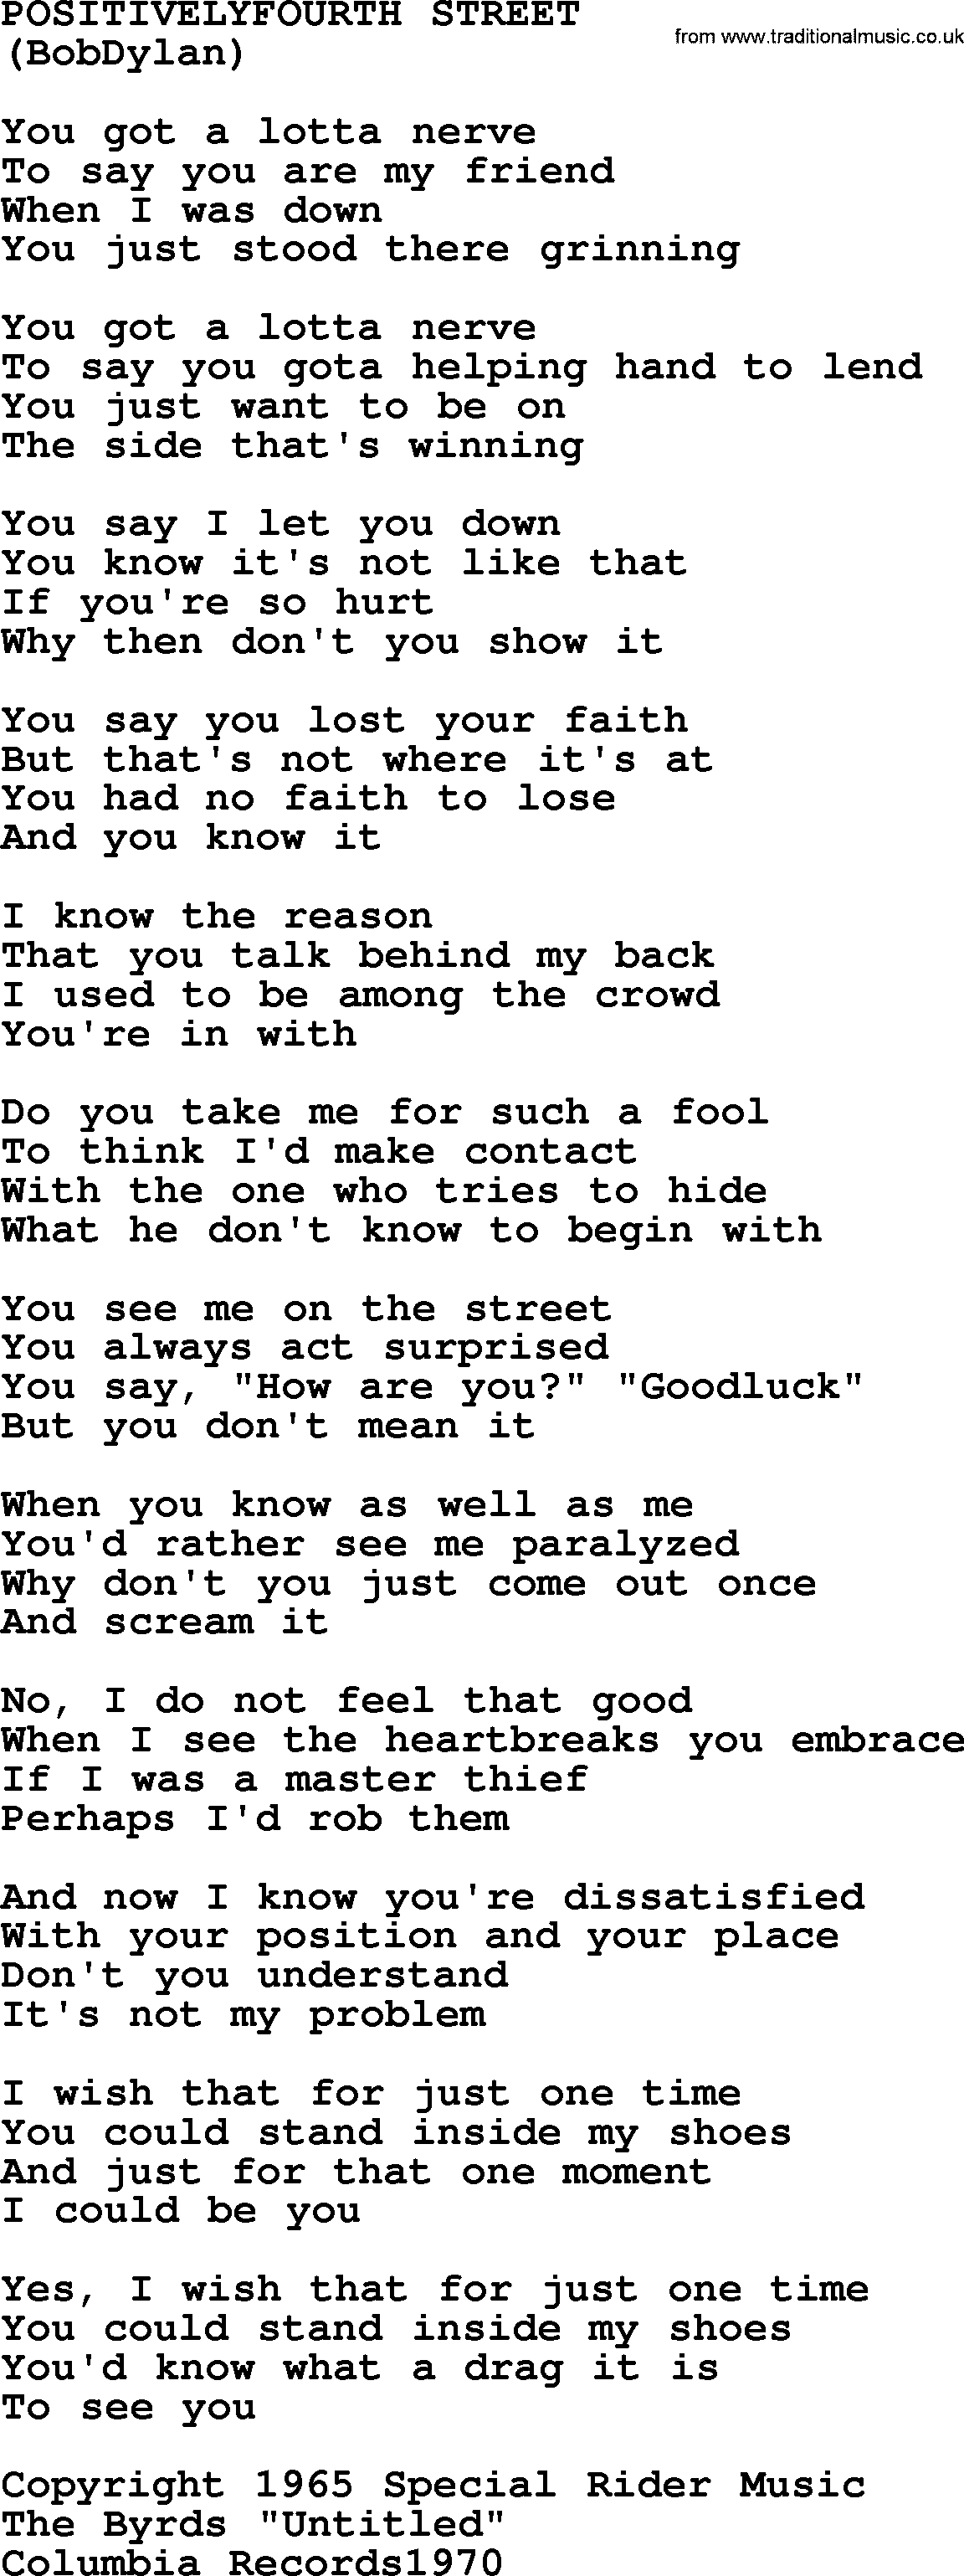 The Byrds song Positivelyfourth Street, lyrics